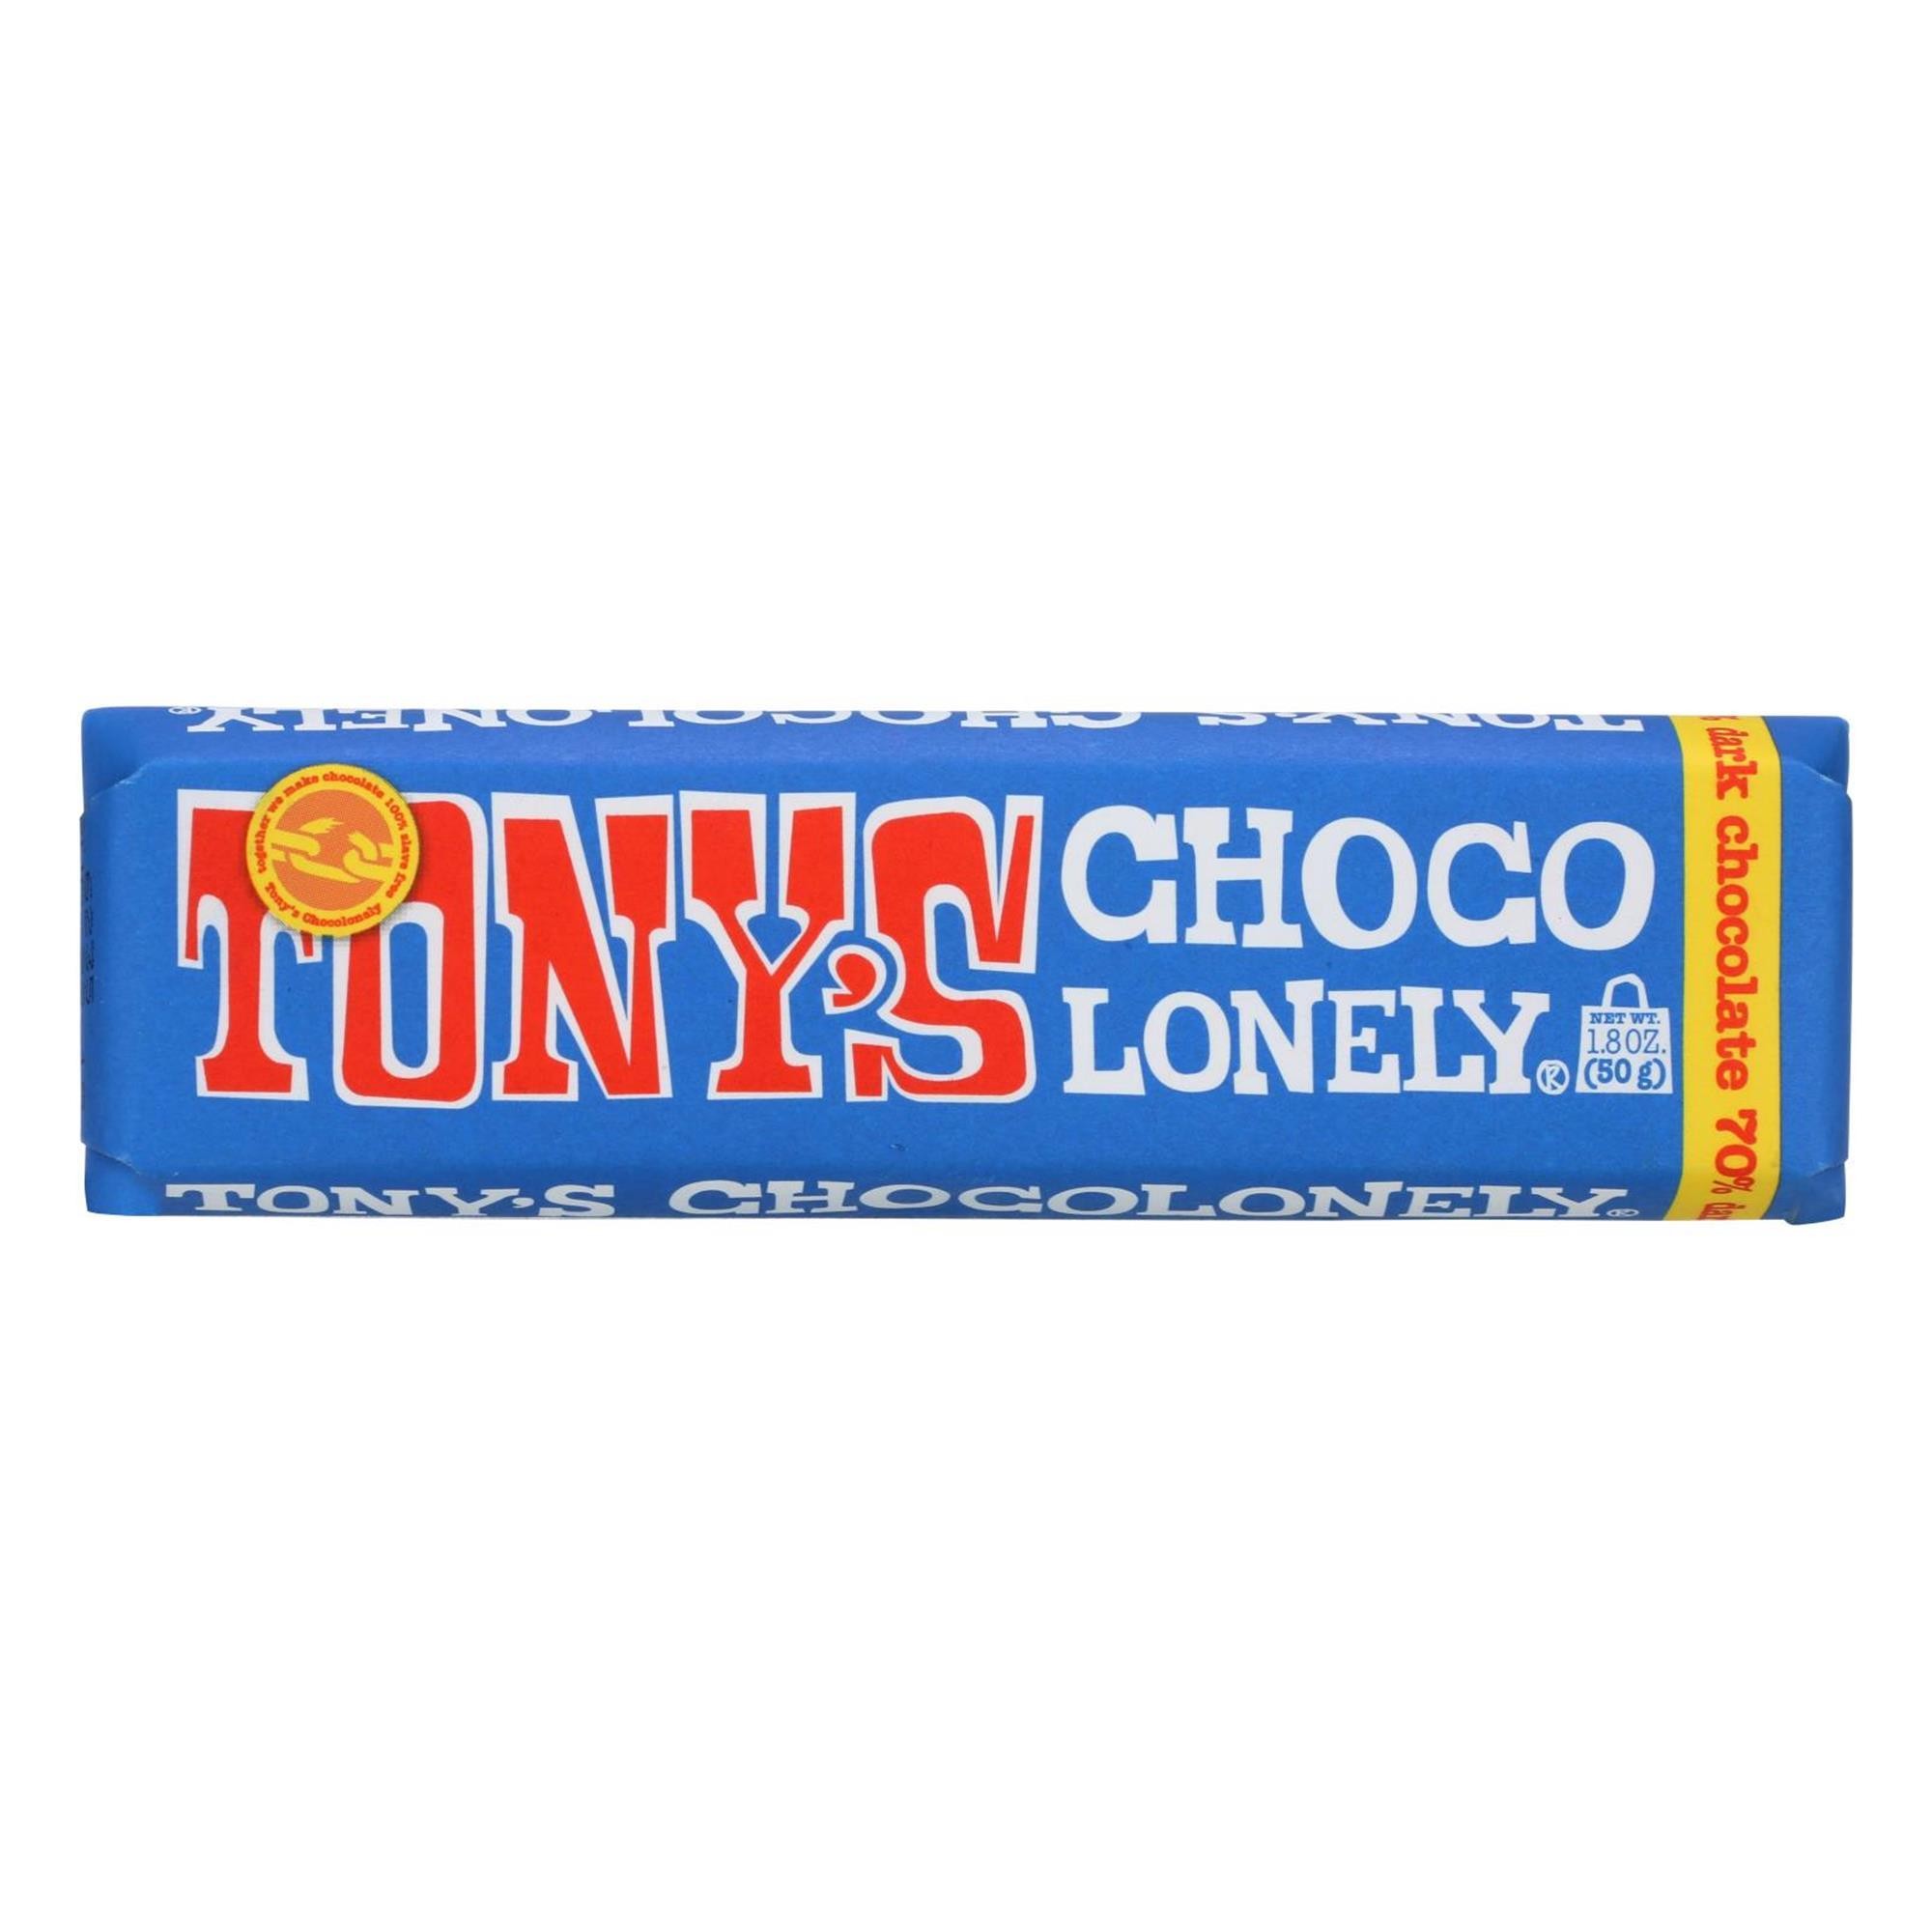 Tony's dark chocolate mini bar